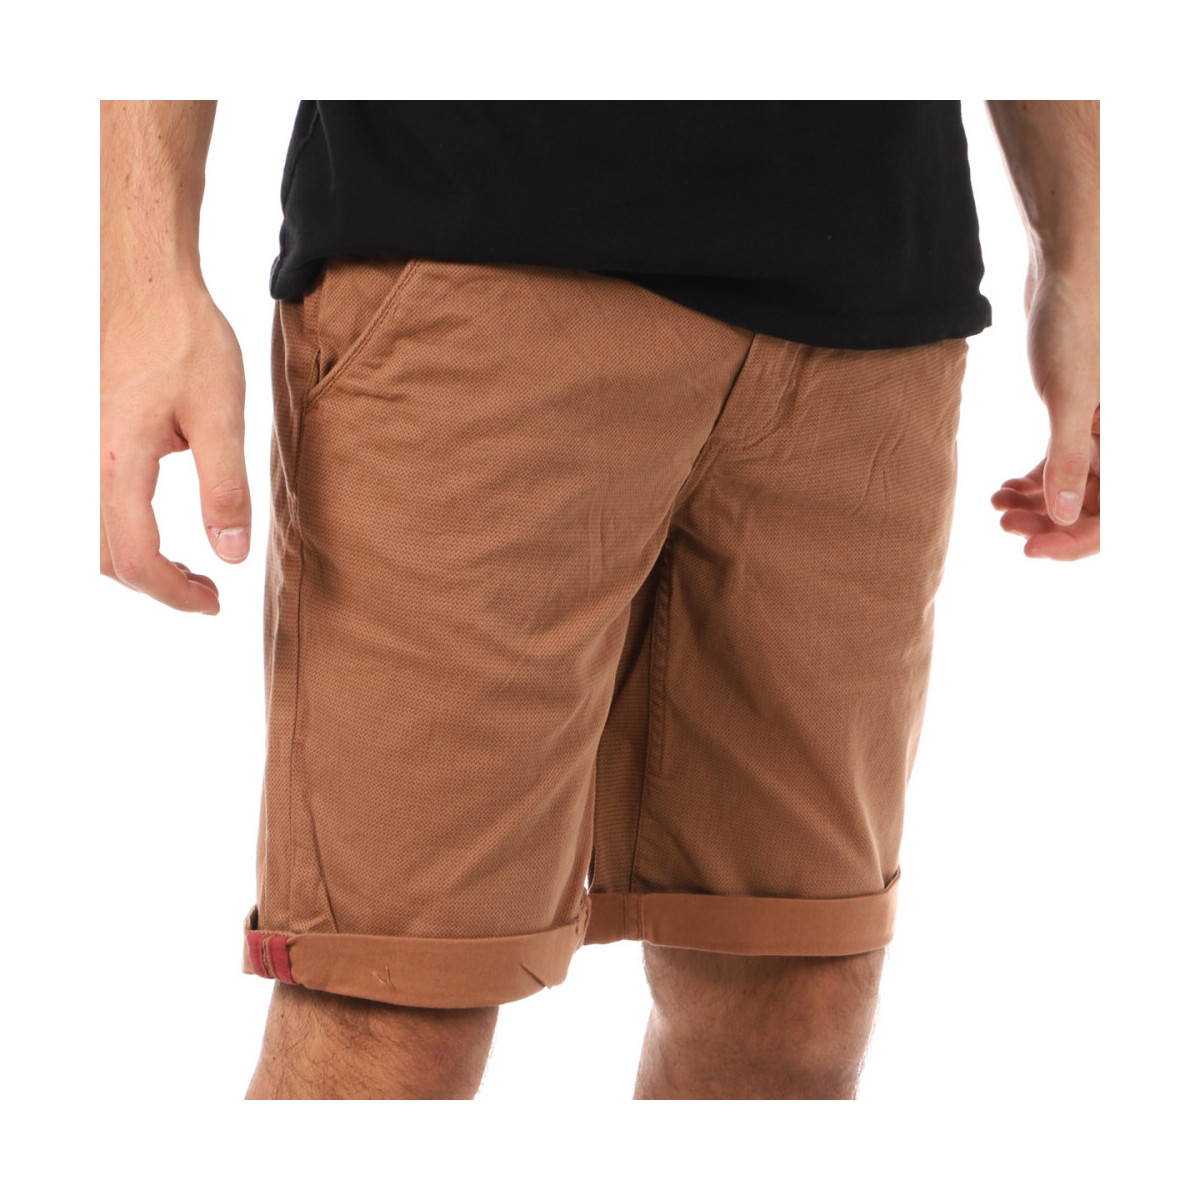 Abbigliamento Uomo Shorts / Bermuda Rms 26 RM-3593 Marrone